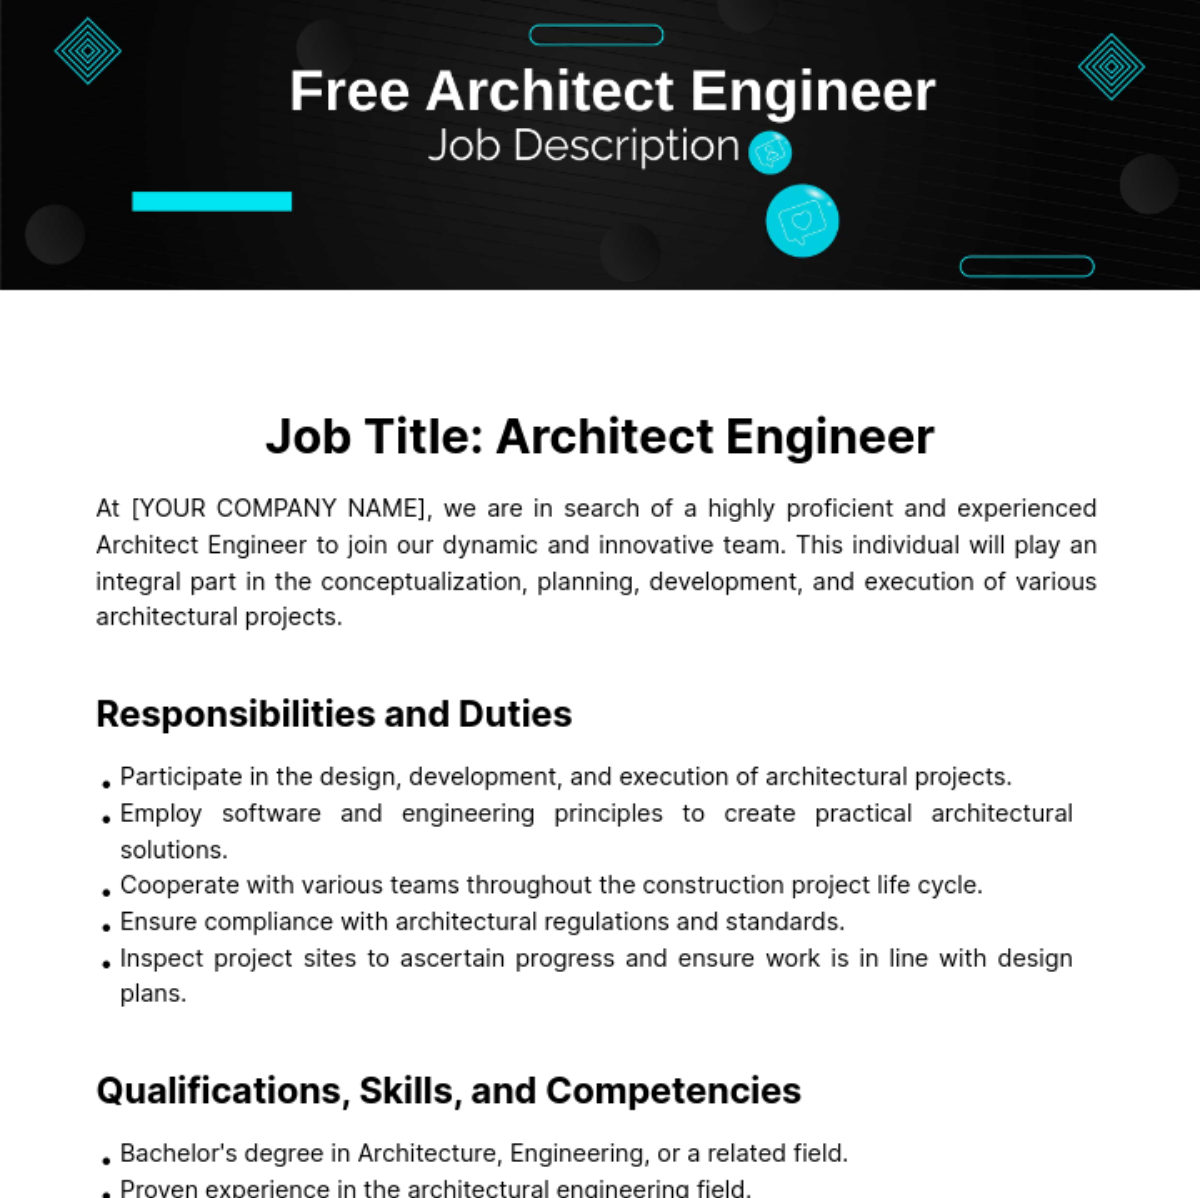 Free Architect Engineer Job Description Template